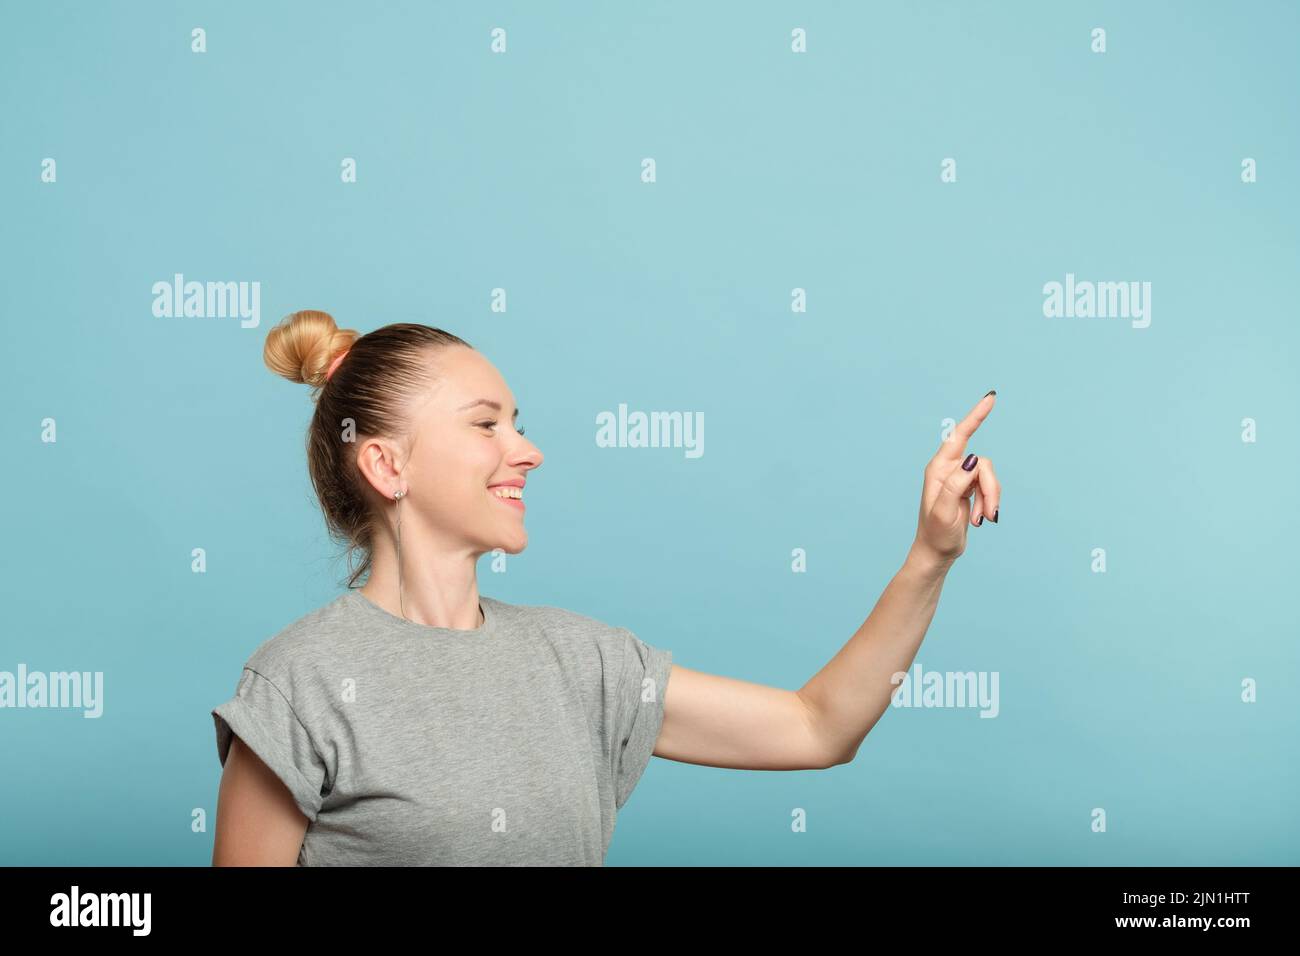 smiling woman push button virtual interface Stock Photo